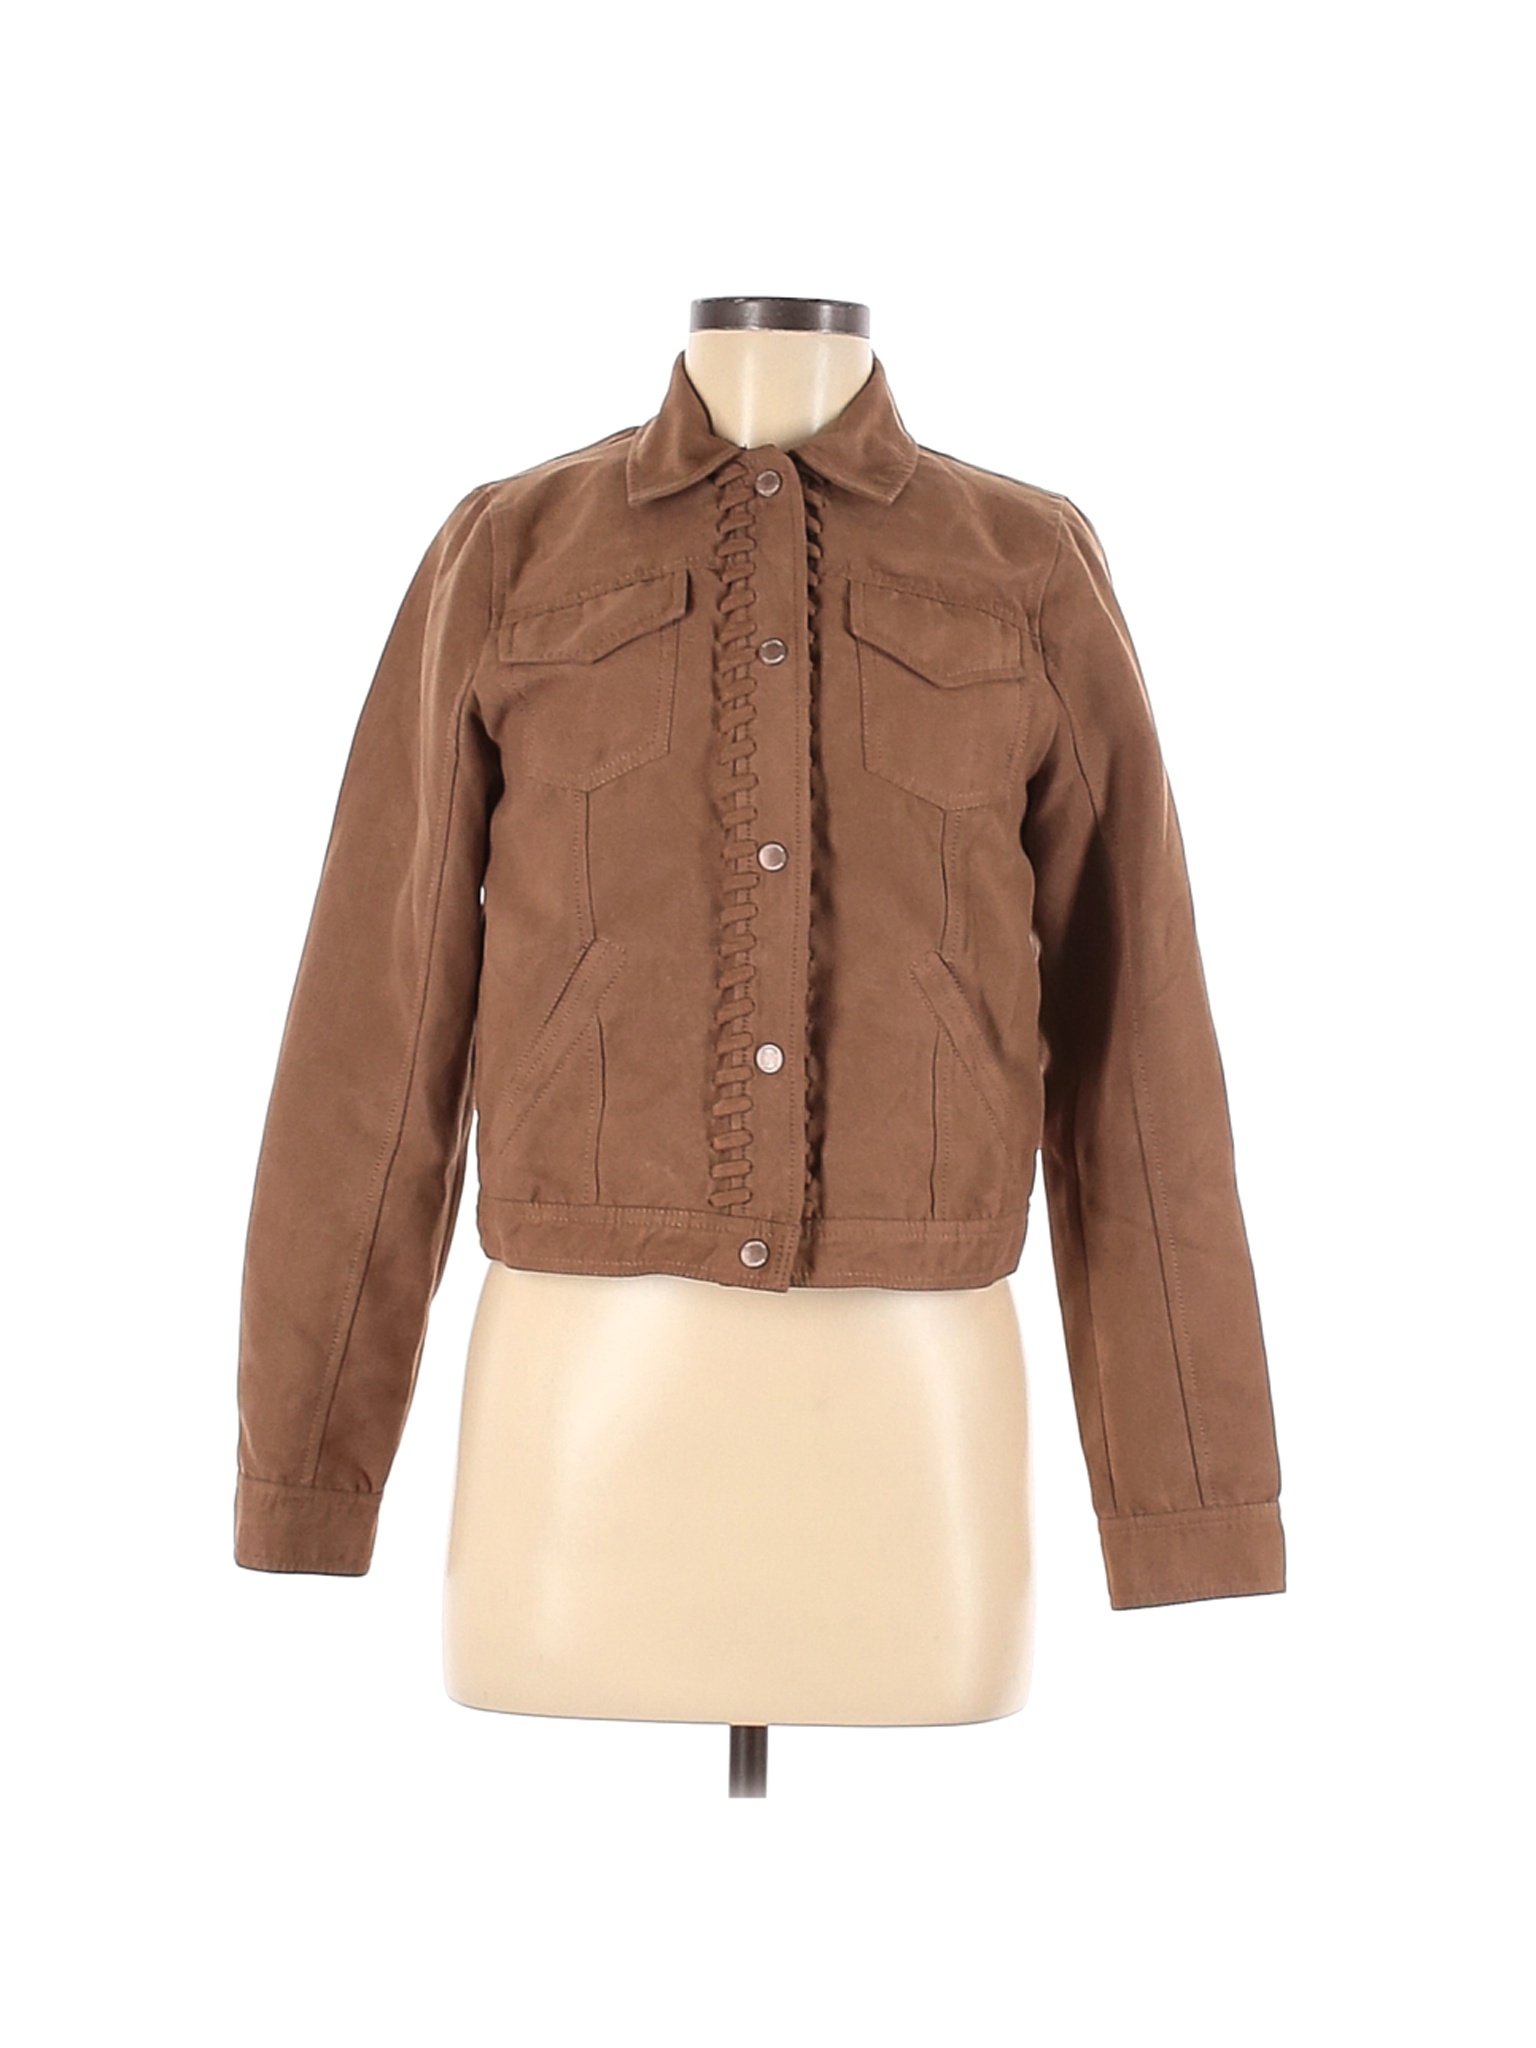 Hollister Women Brown Jacket M | eBay